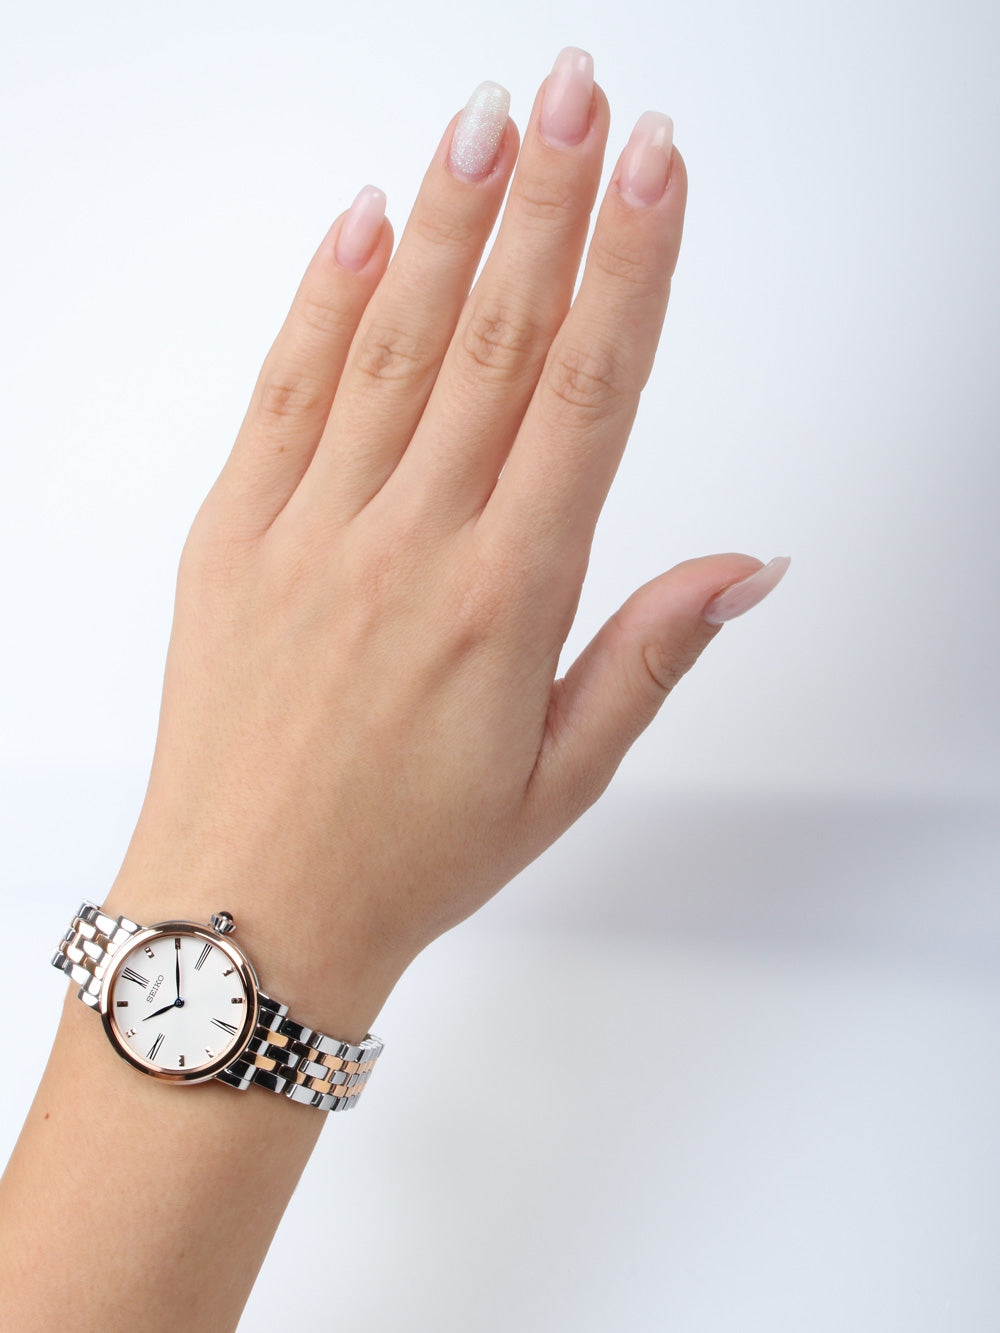 Seiko SFQ816P1 Ladies Modern Watch bicolor 25mm 50M